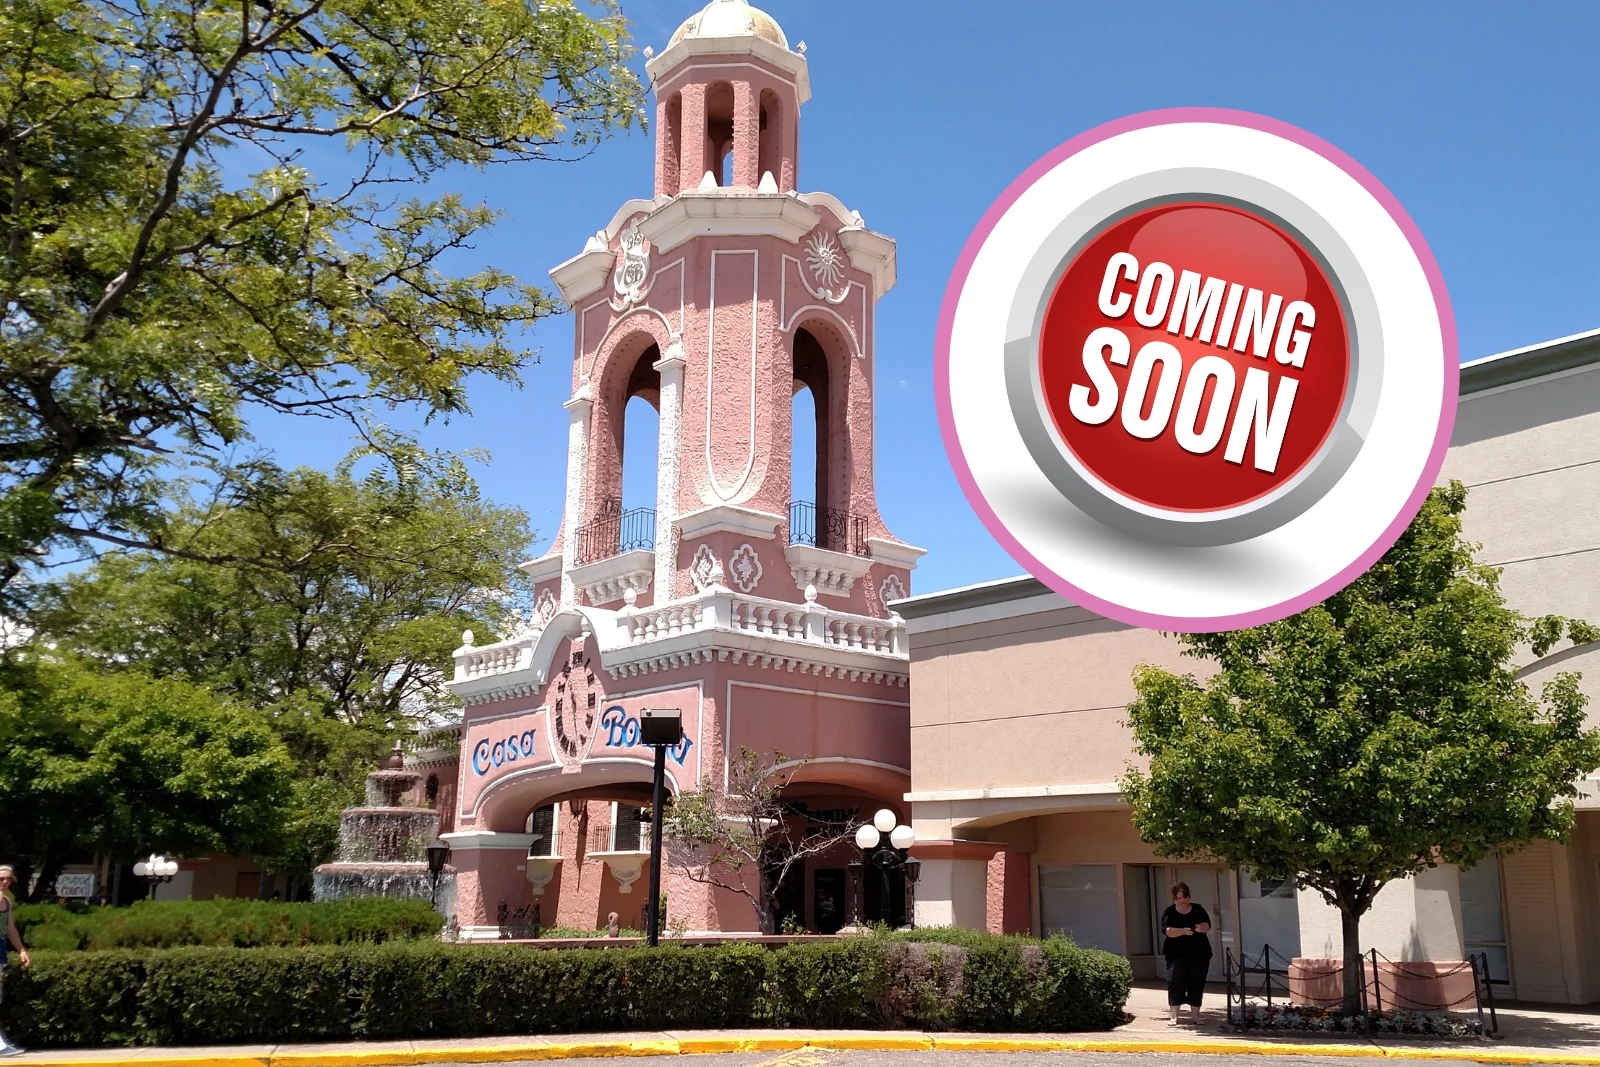 Casa Bonita Restaurant: South Park Creators Announce May 2023 Reopening